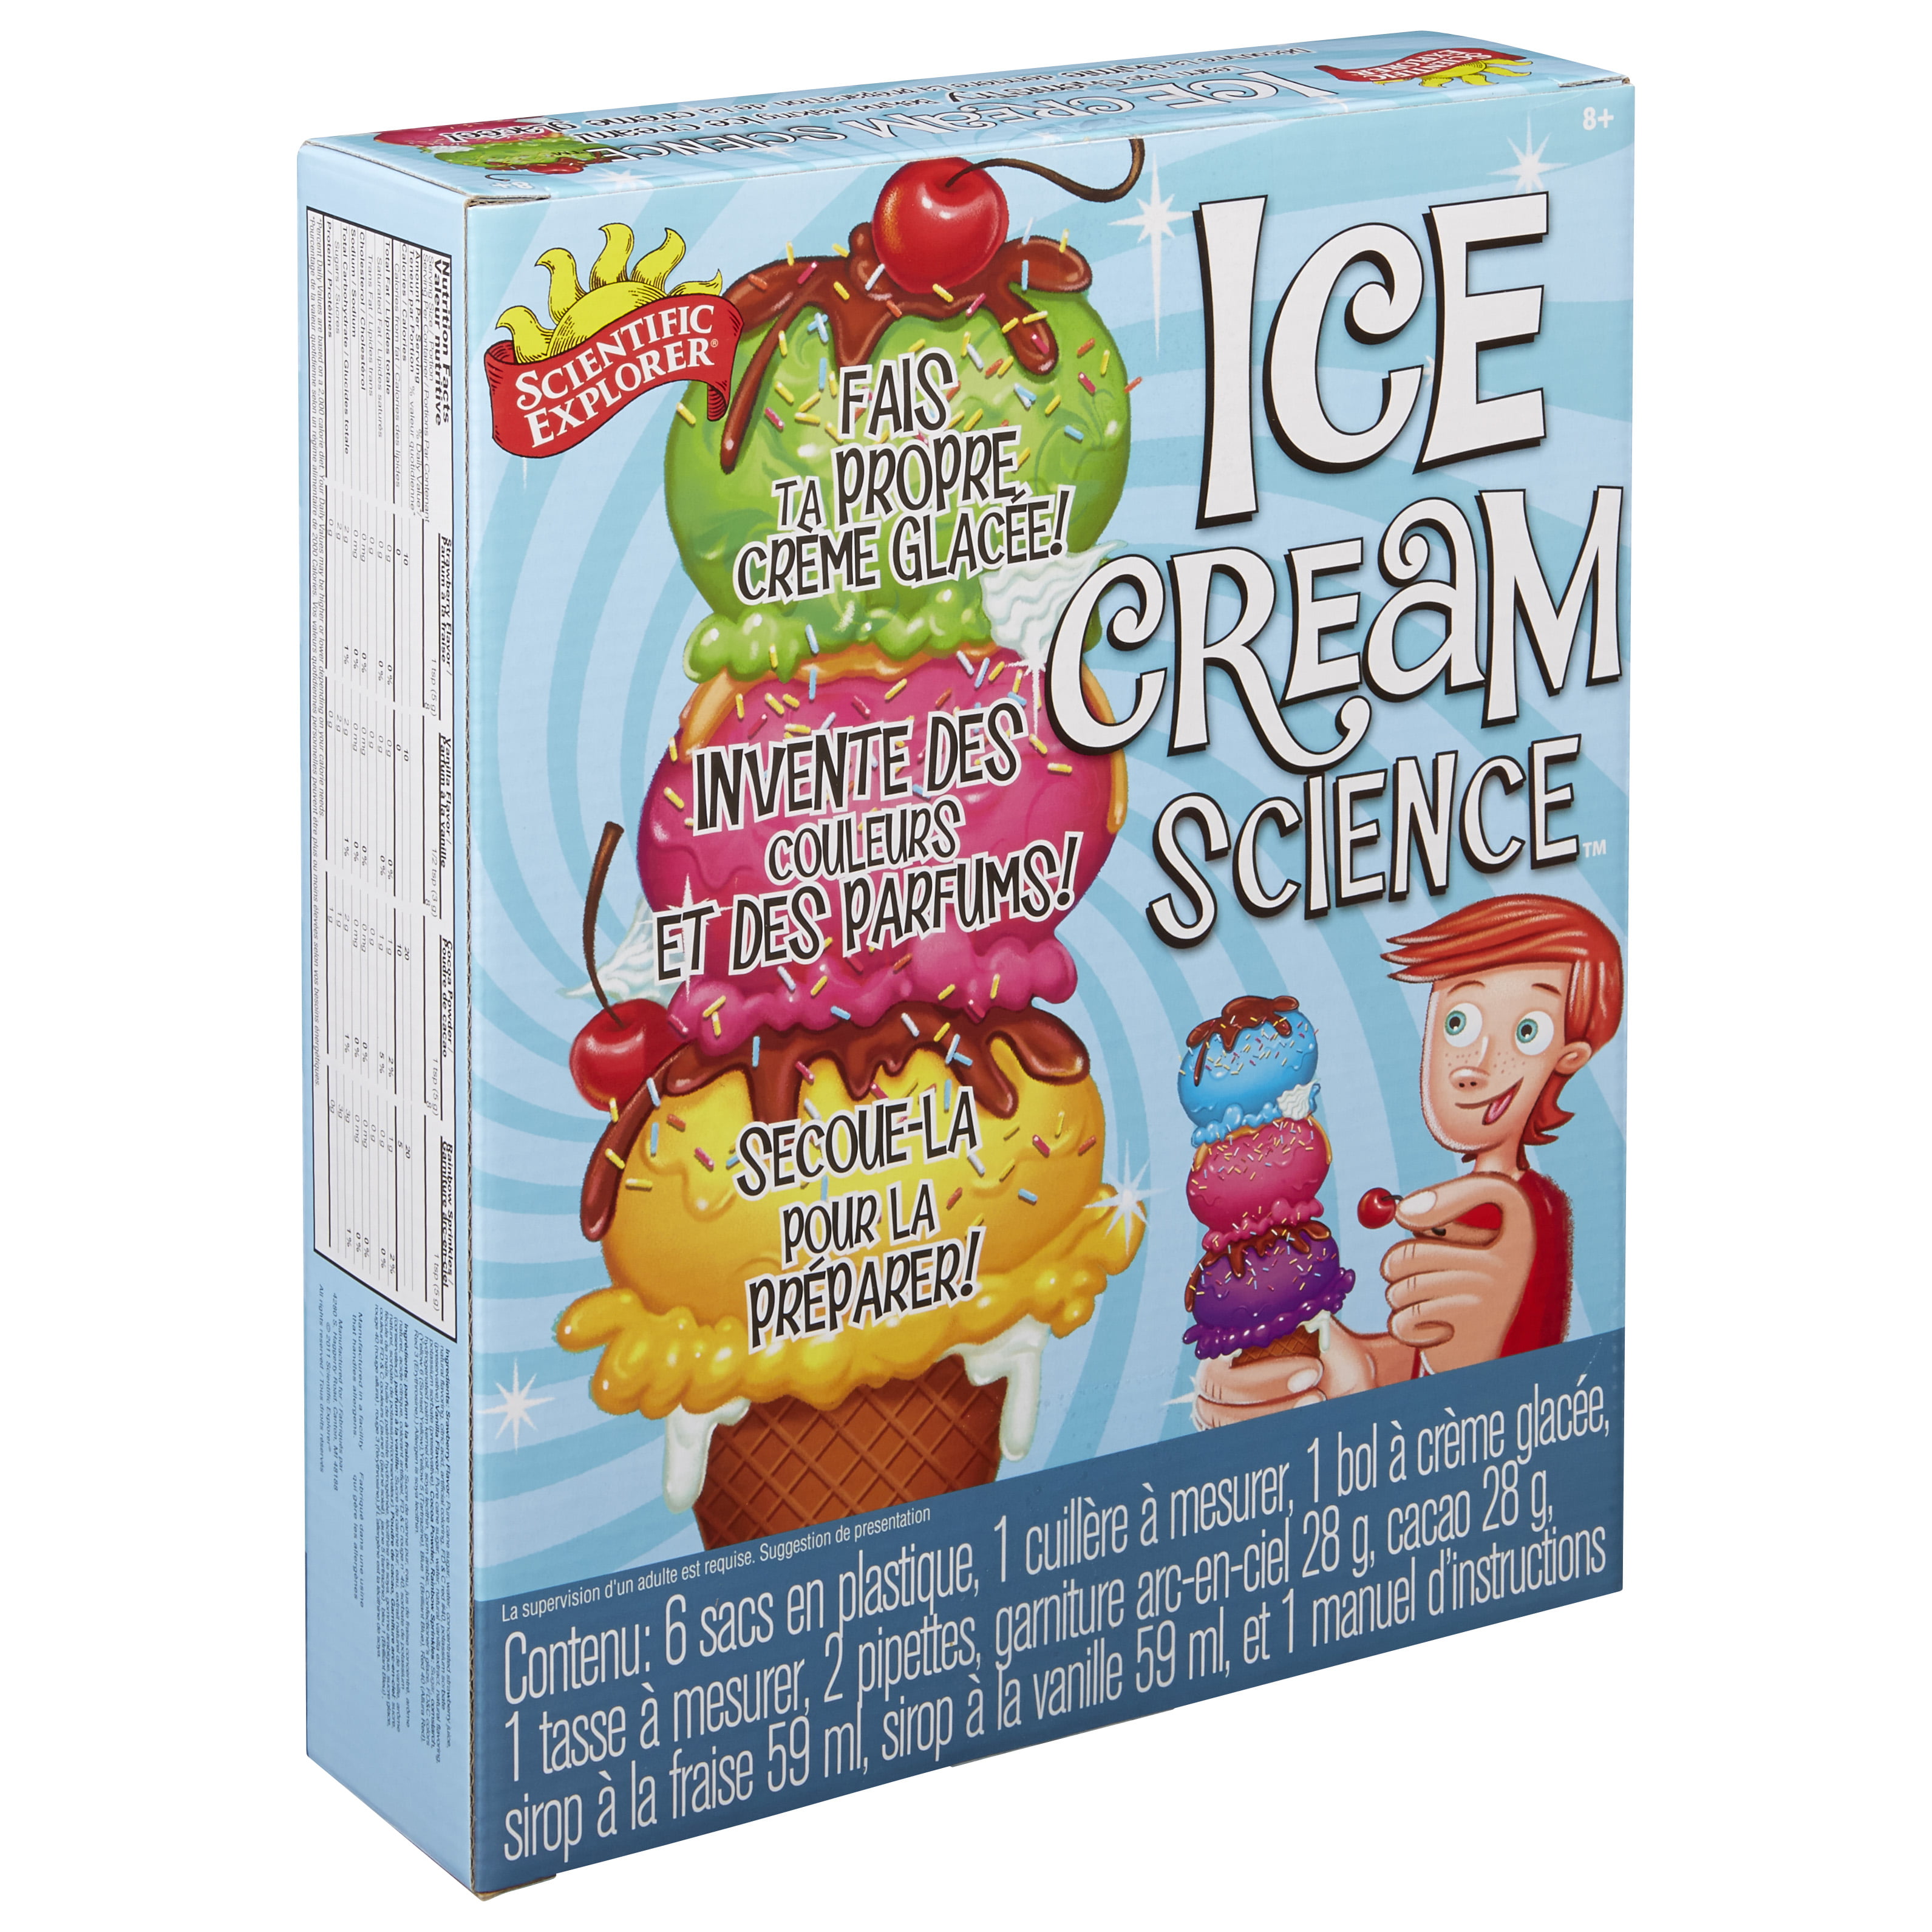 Tiny Ice Cream Science Kit